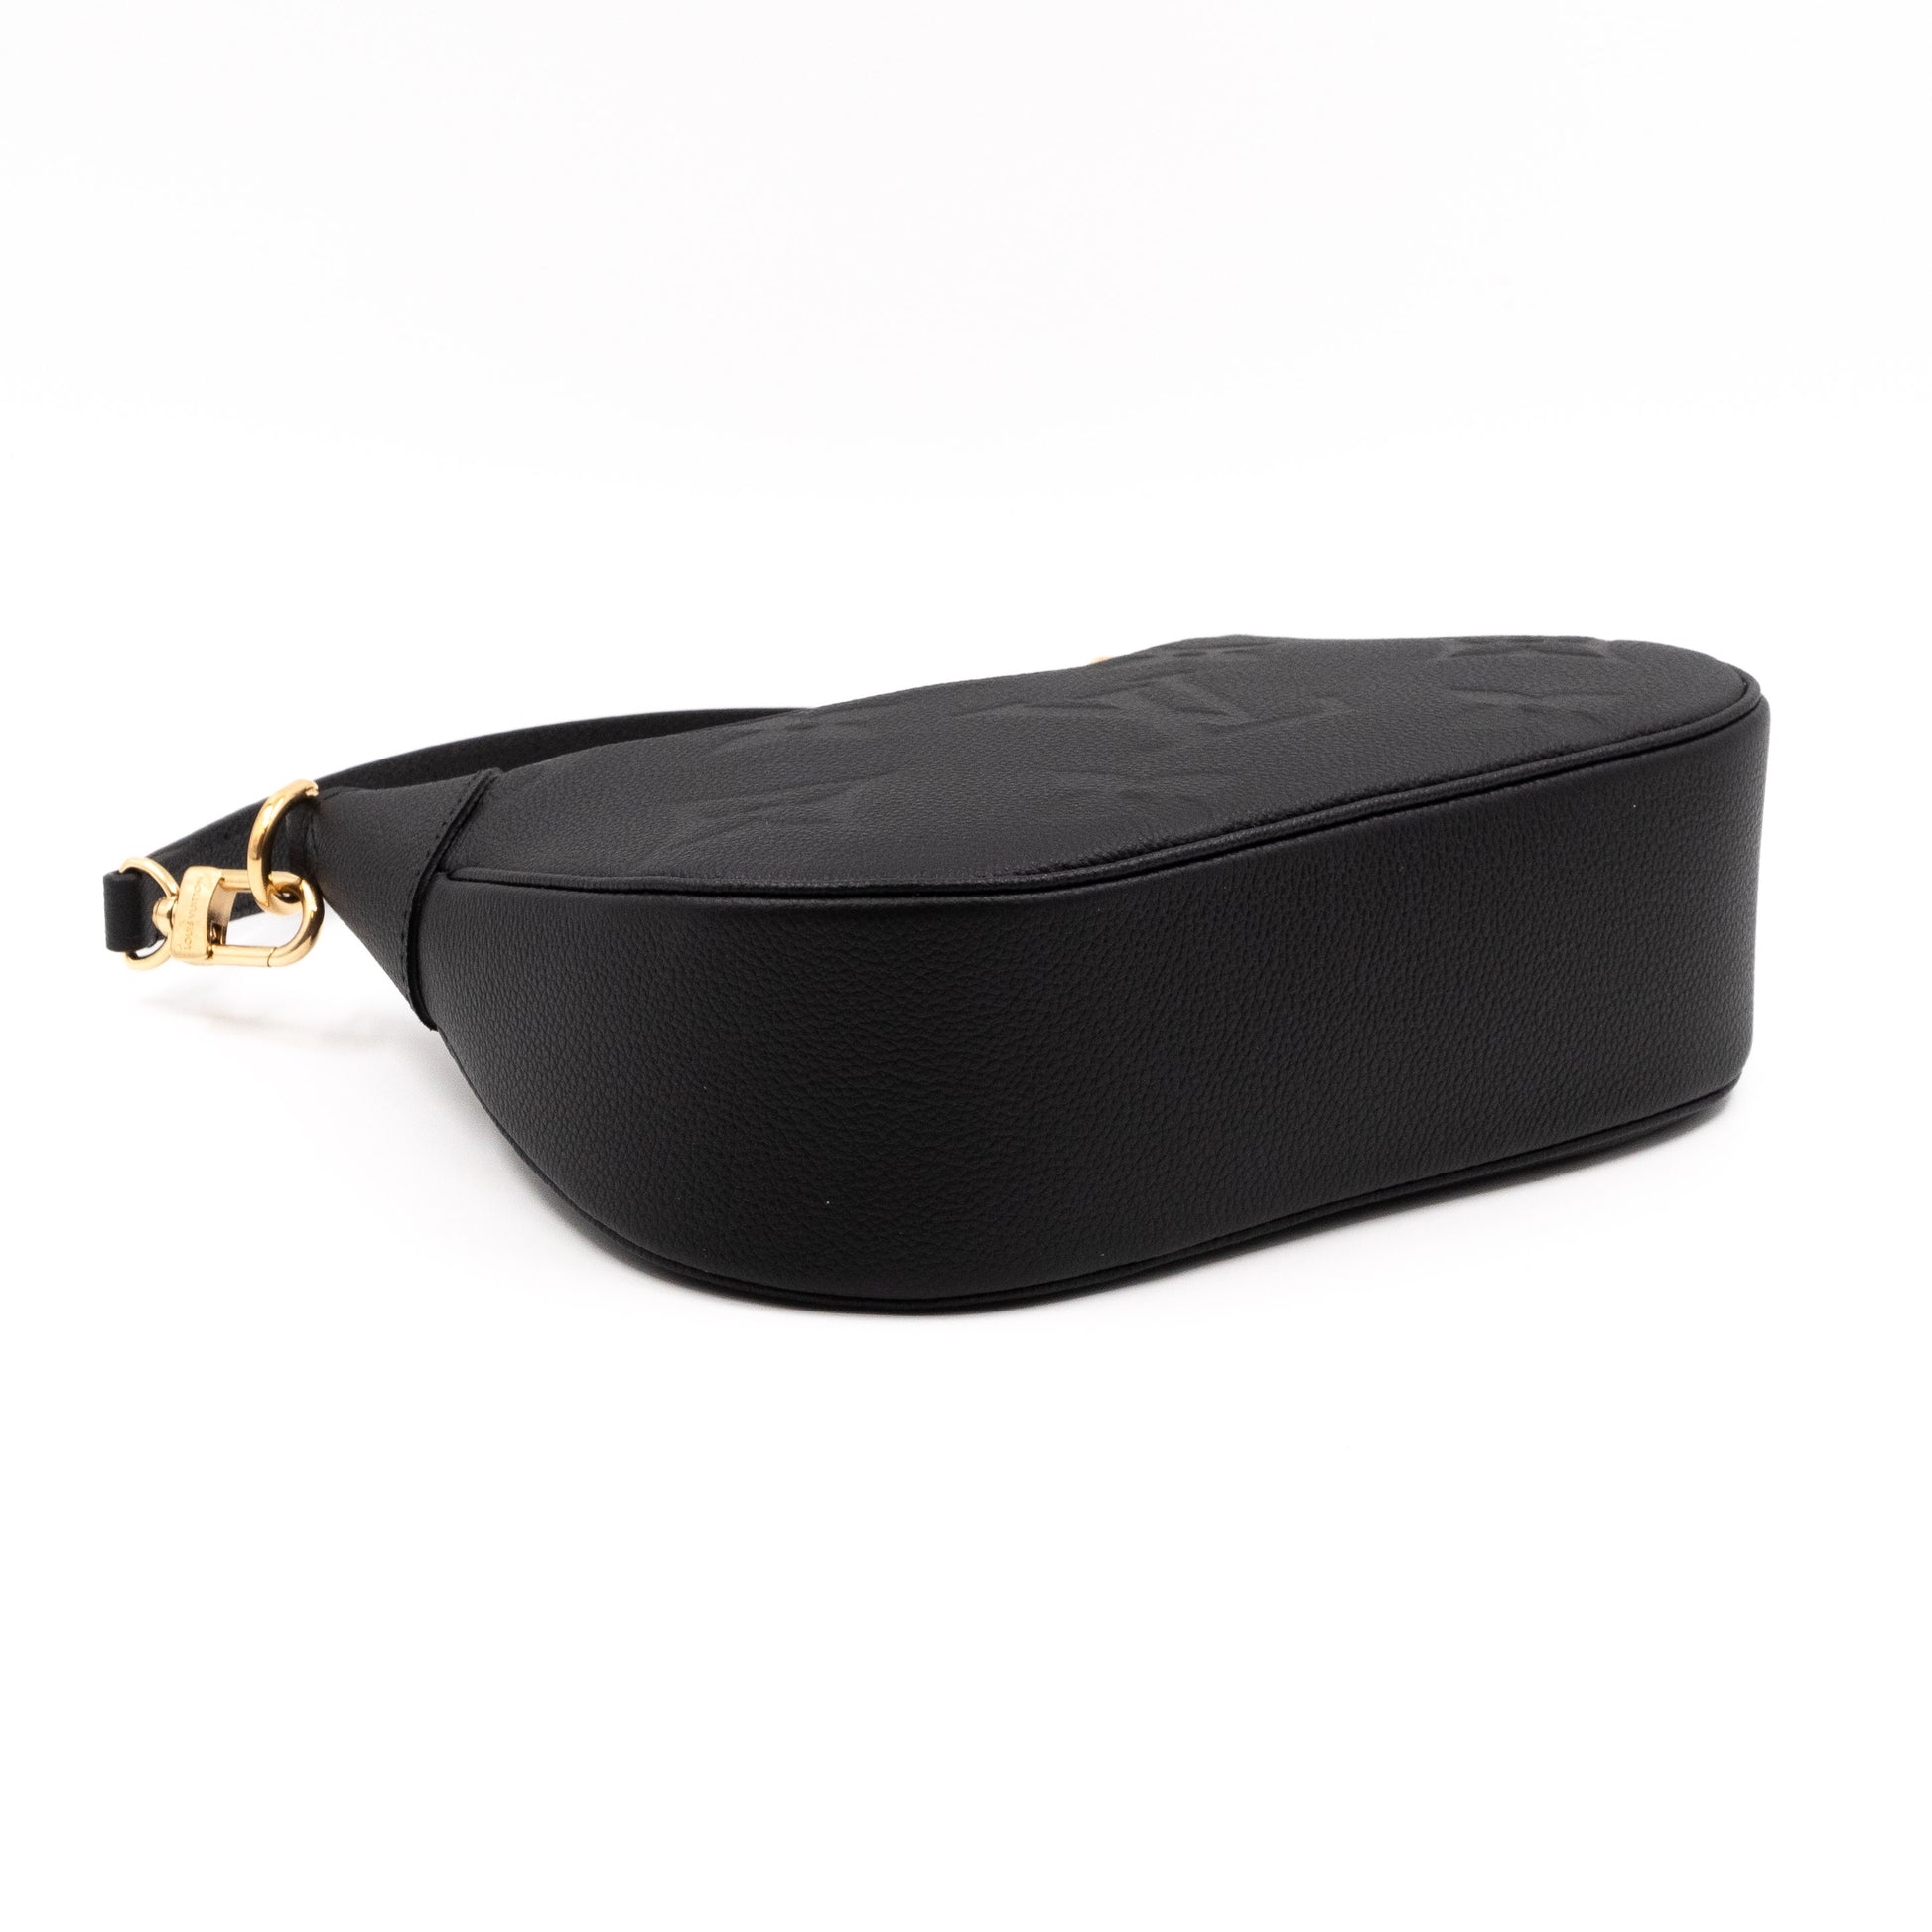 Louis Vuitton Bagatelle Handbag 360401